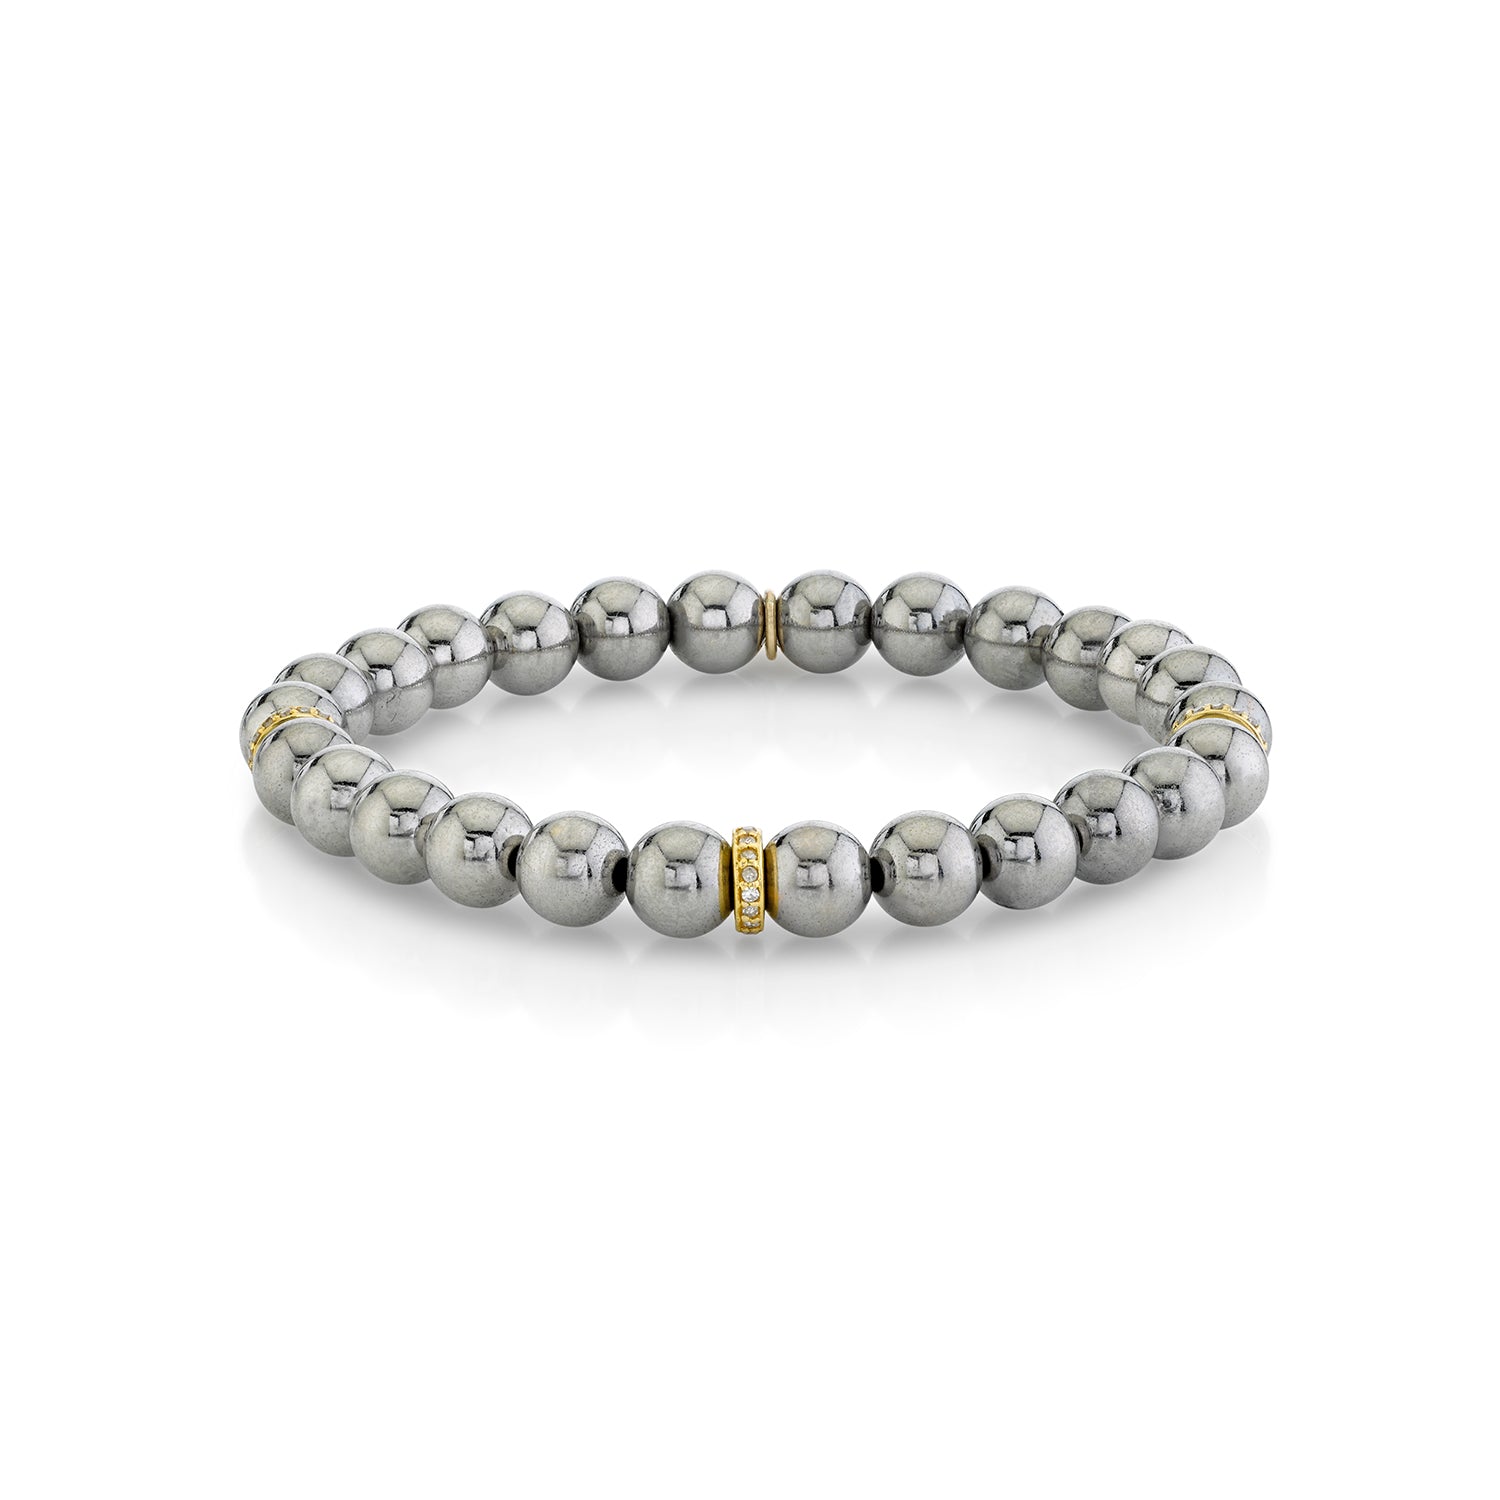 Silver Bali Bead Bracelet with 14k Diamond Rondelles BG000269 - TBird